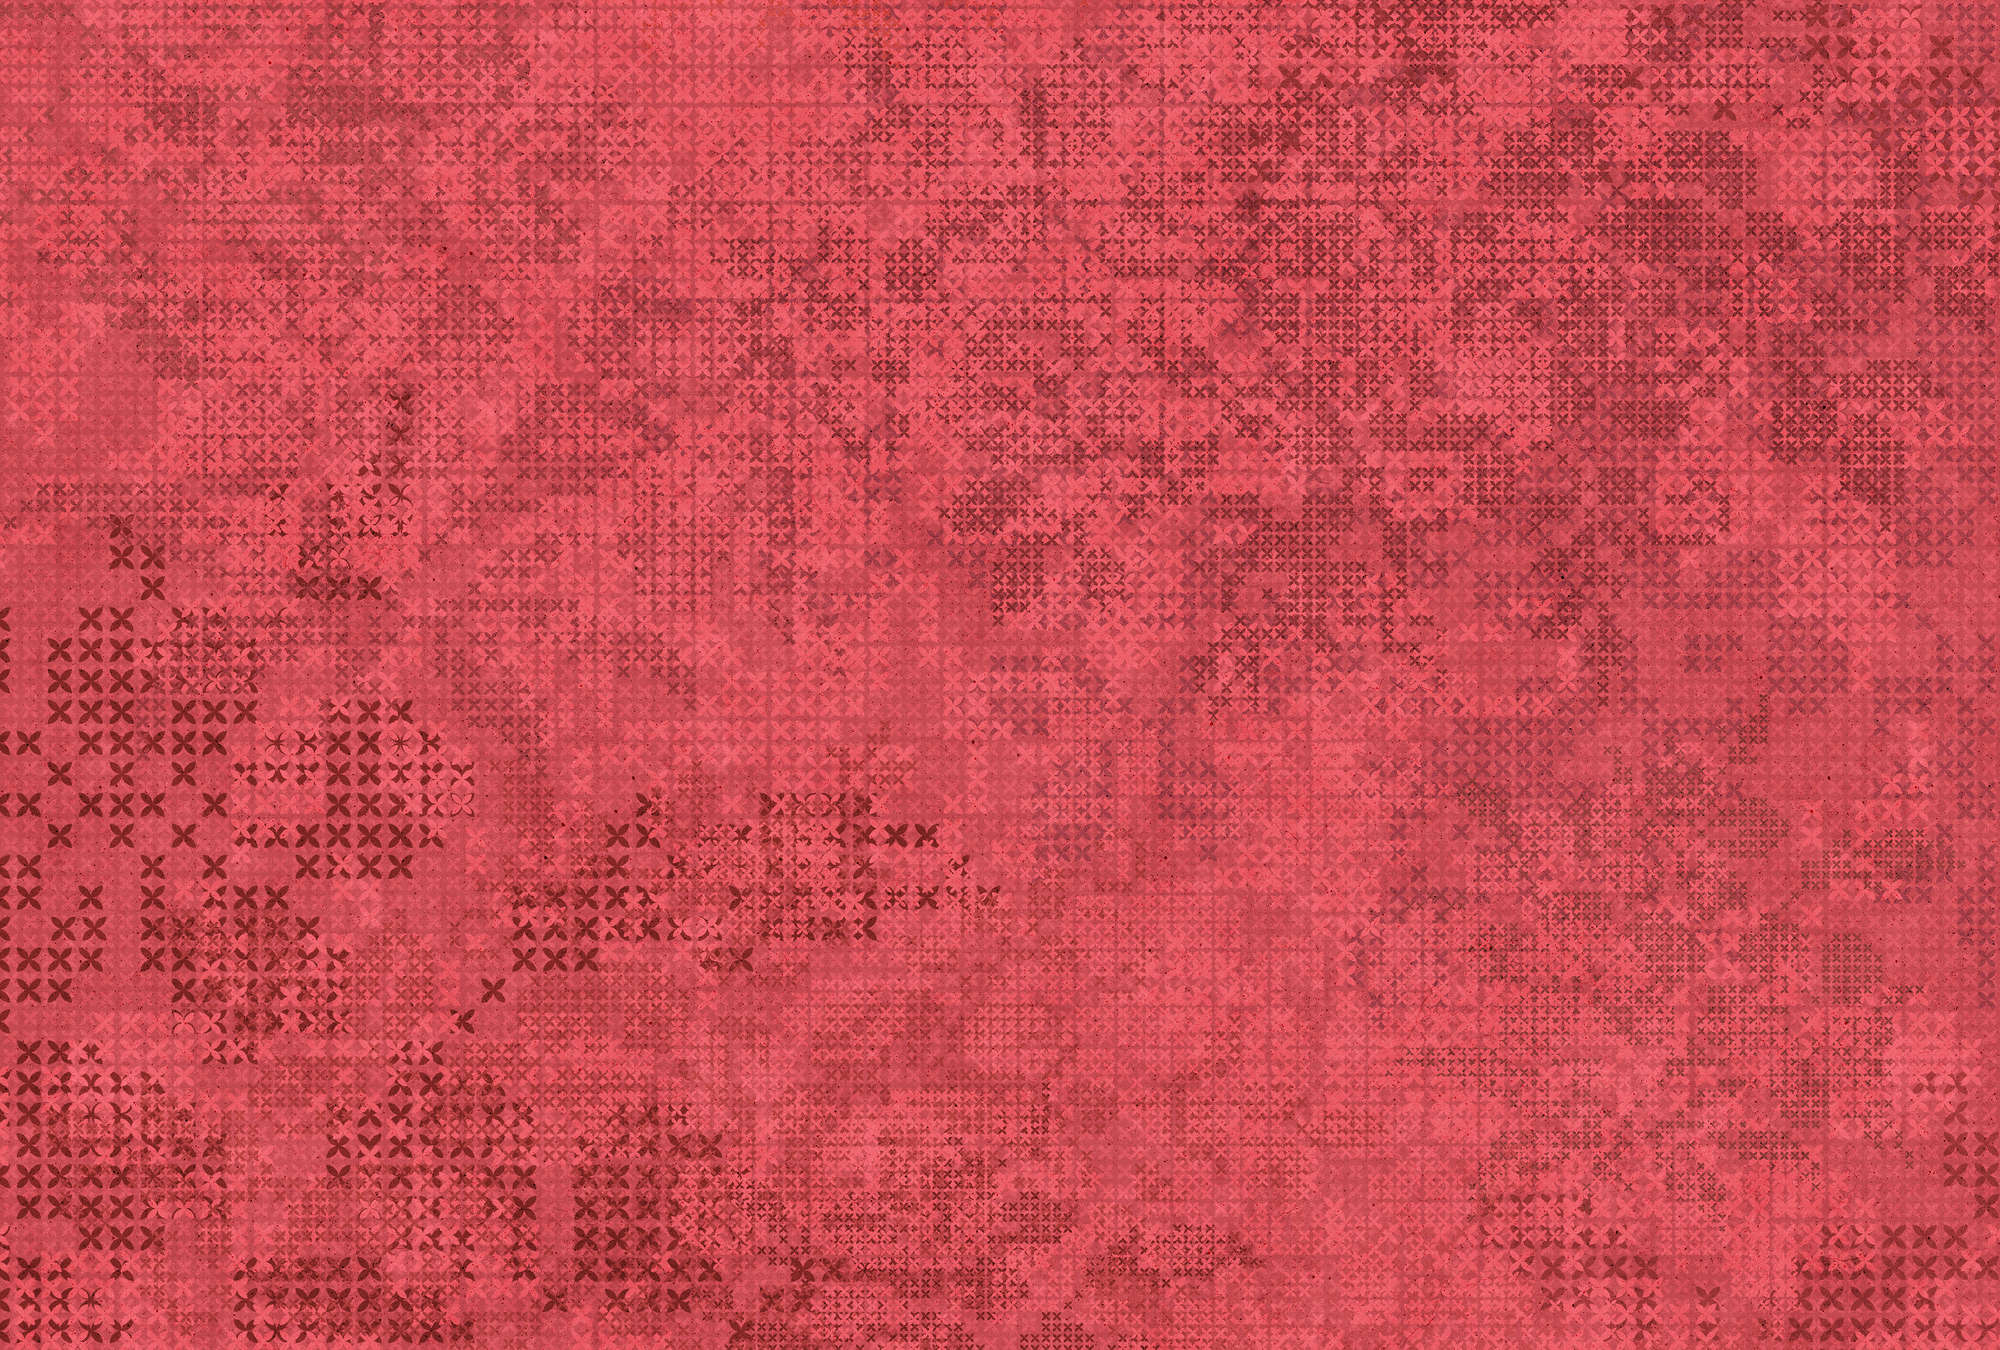             Pixel Fototapete Kreuzstich Muster – Rot, Schwarz
        